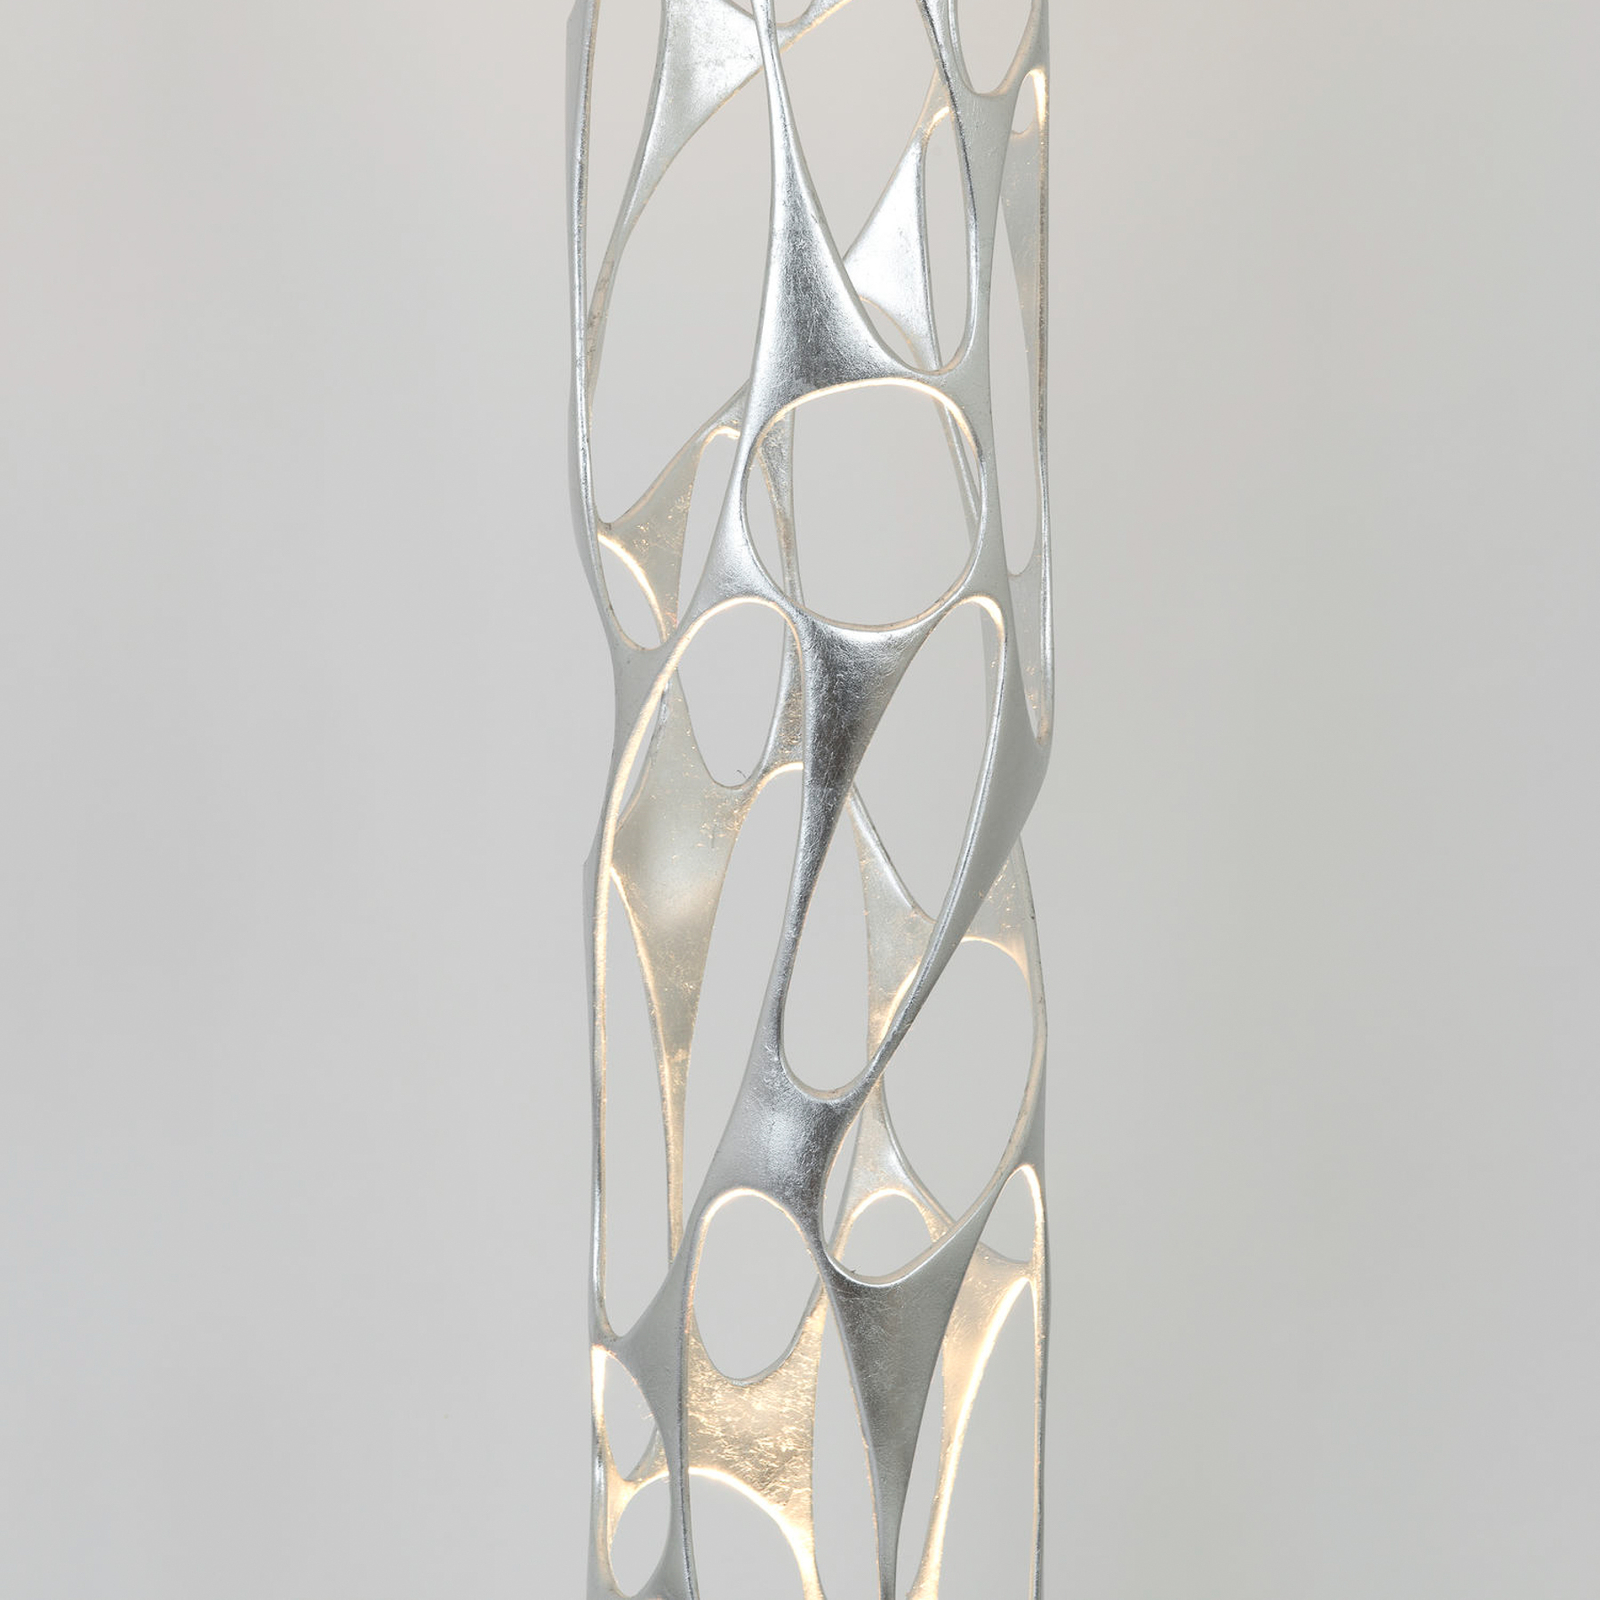 Talismano gulvlampe, sølvfarvet, højde 176 cm, jern